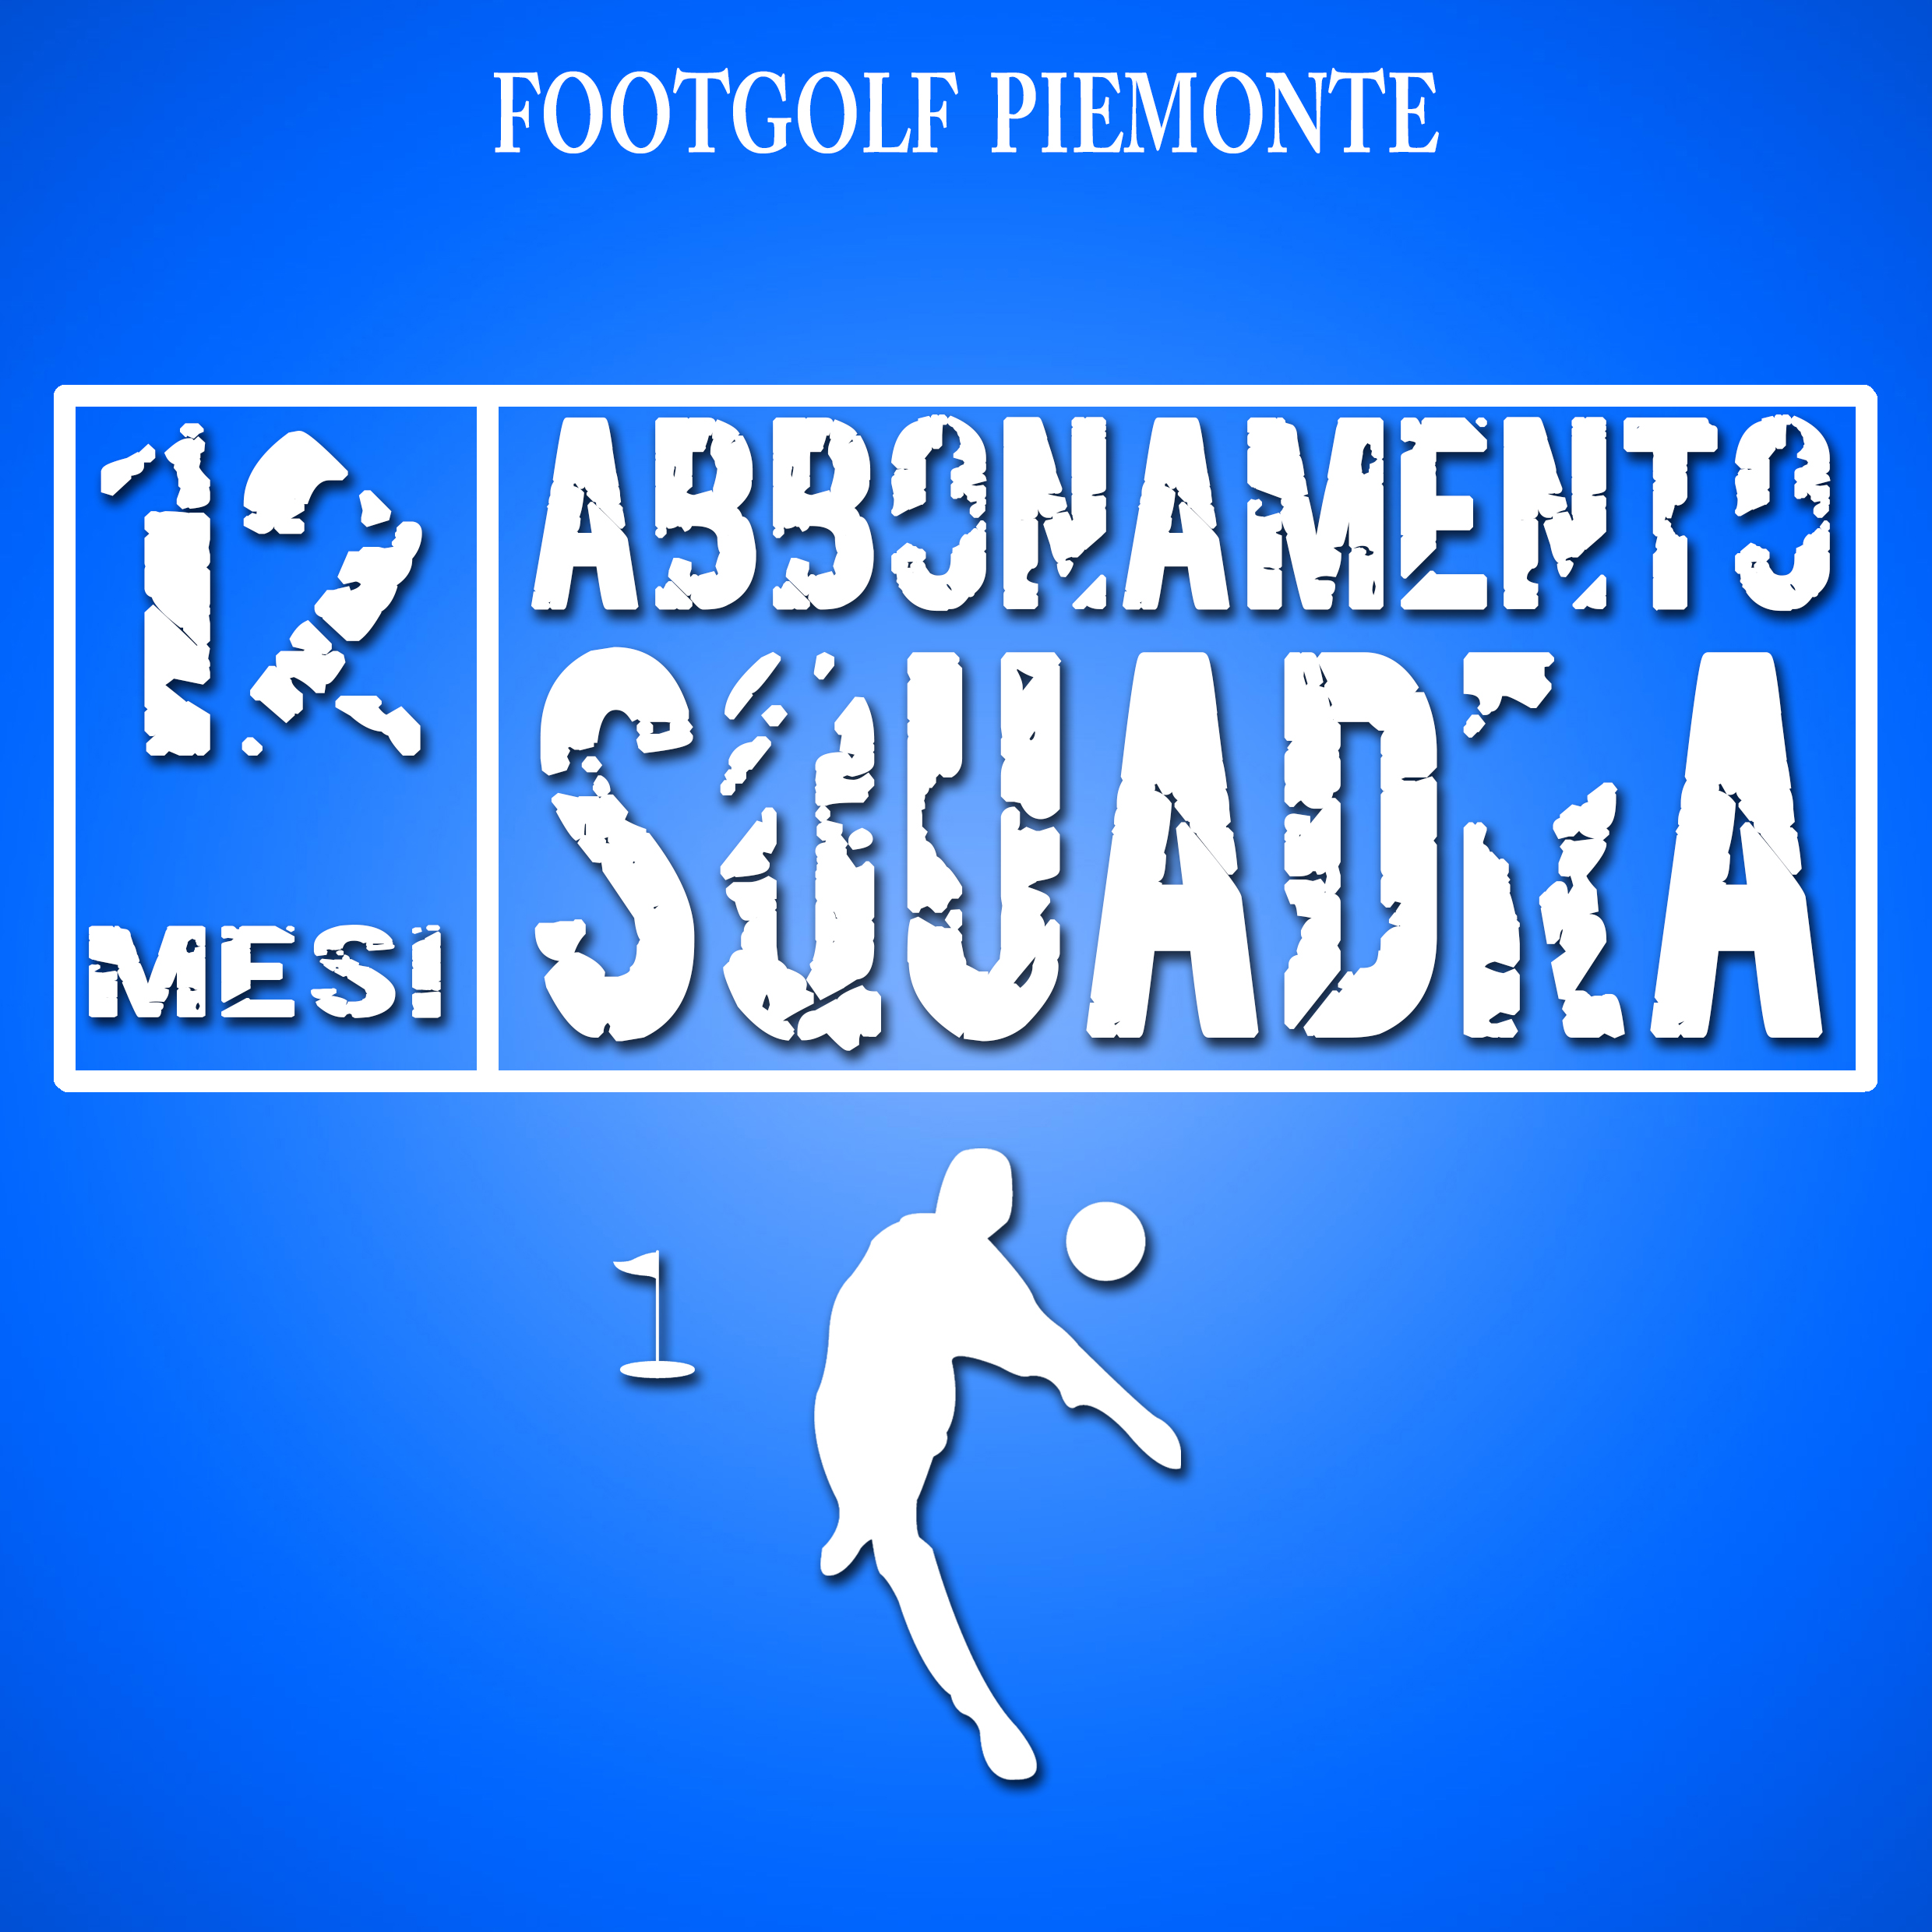 Abbonamento Footgolf Piemonte SQUADRA